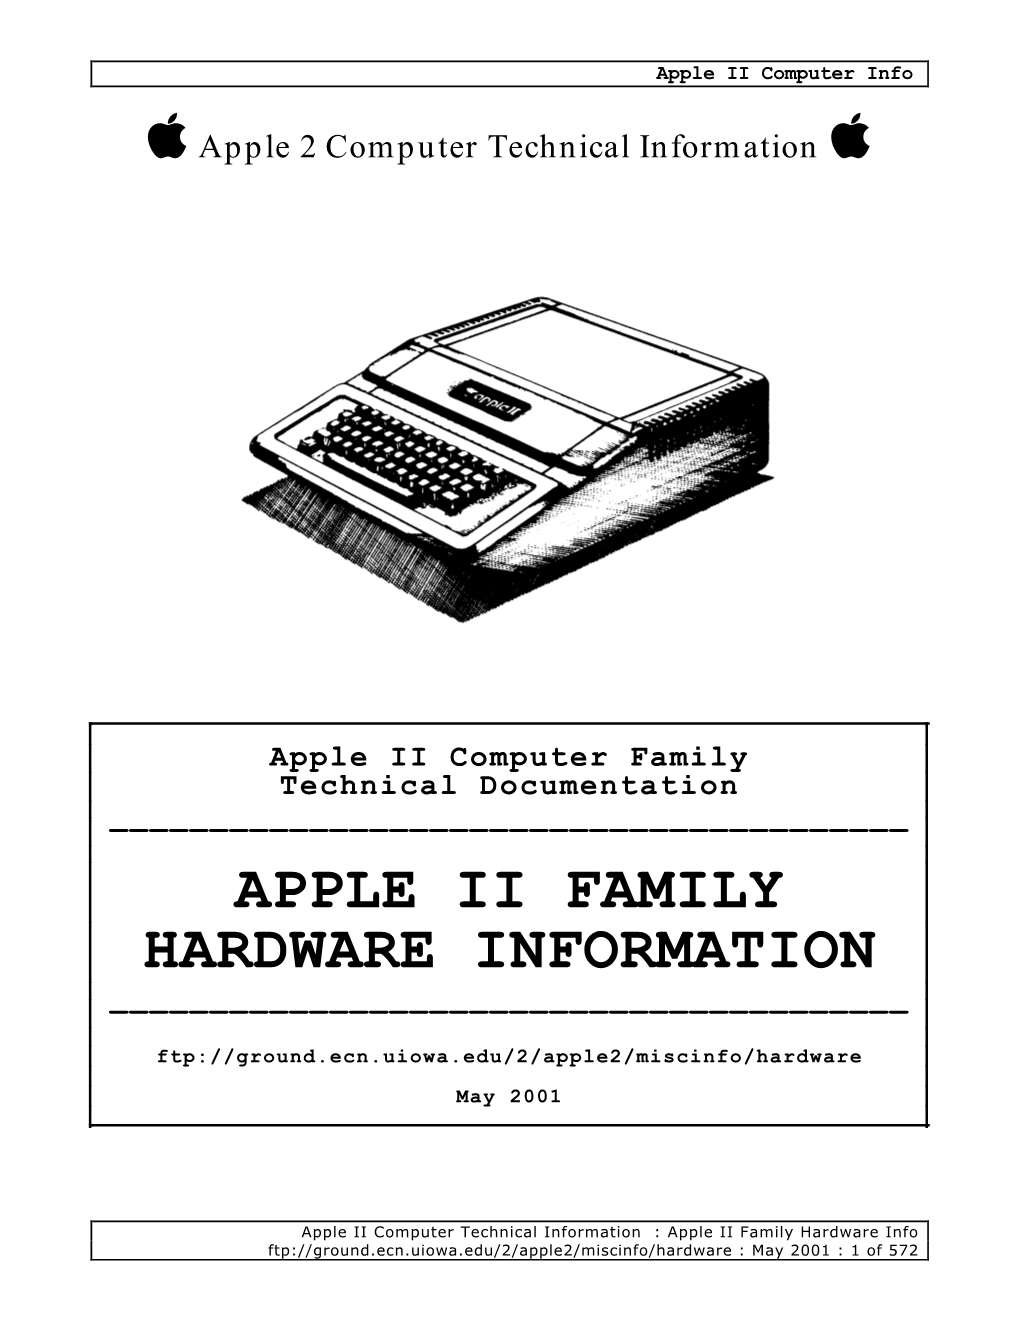 APPLE II FAMILY HARDWARE INFORMATION ———————————————————————————————————————— Ftp://Ground.Ecn.Uiowa.Edu/2/Apple2/Miscinfo/Hardware May 2001